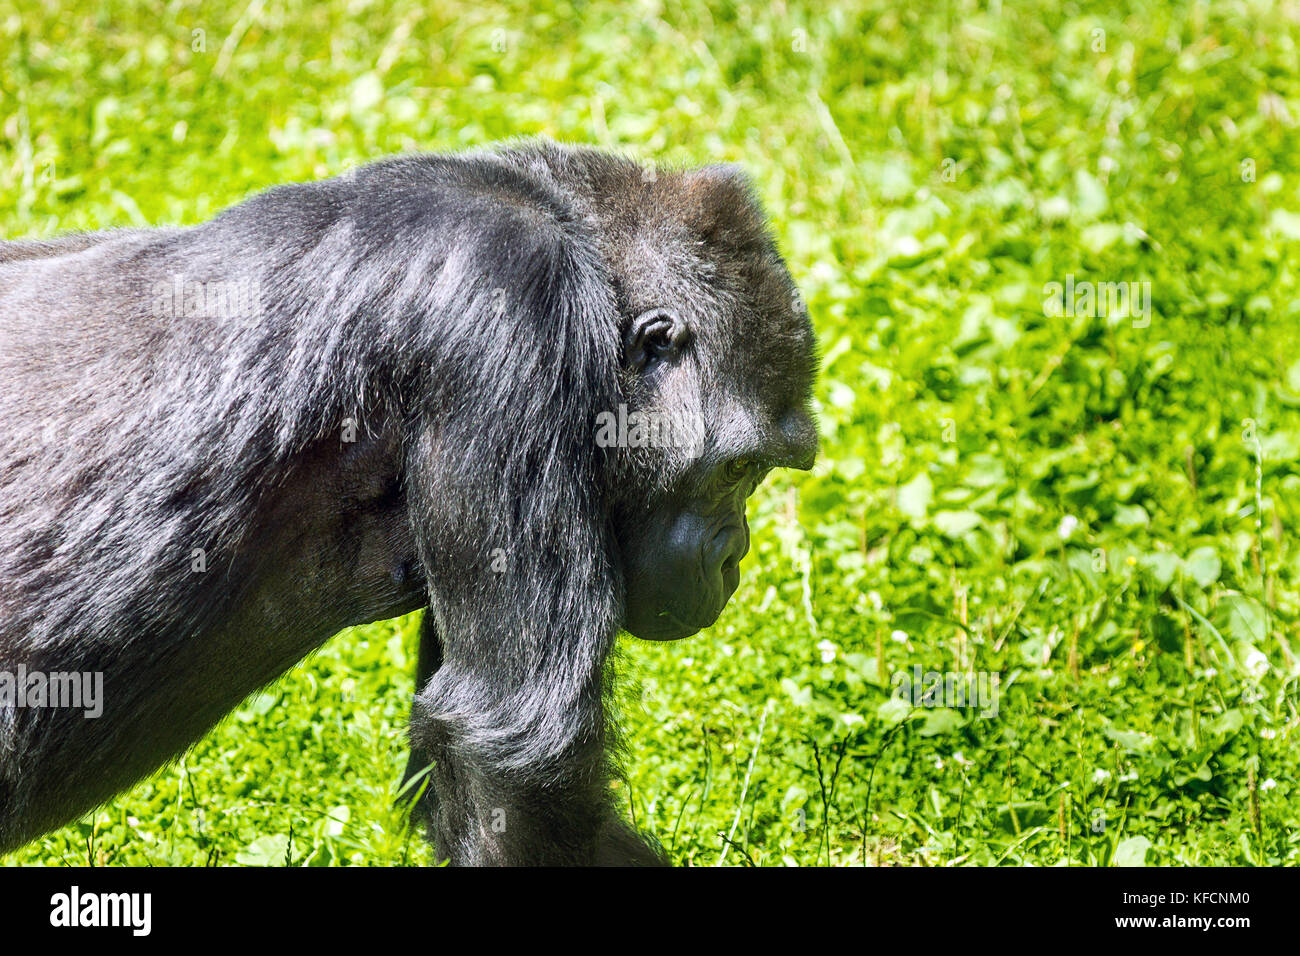 Western pianura gorilla.sull'erba in estate.in Africa equatoriale . Foto Stock